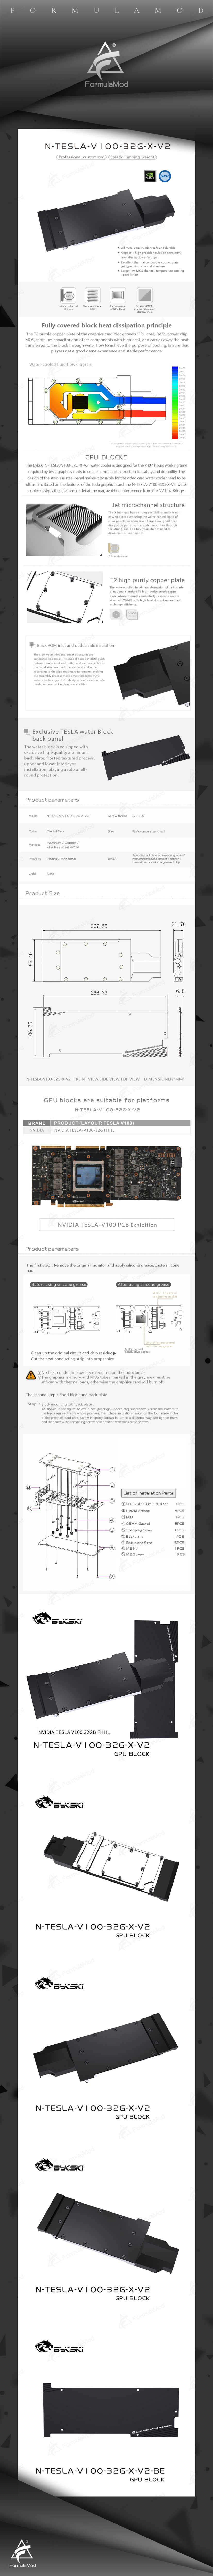 Bykski GPU Block For Nvidia Tesla V100 32GB FHHL, High Heat Resistance Material POM + Full Metal Construction, With Backplate Full Cover GPU Water Cooling Cooler Radiator Block N-TESLA-V100-32G-X-V2  